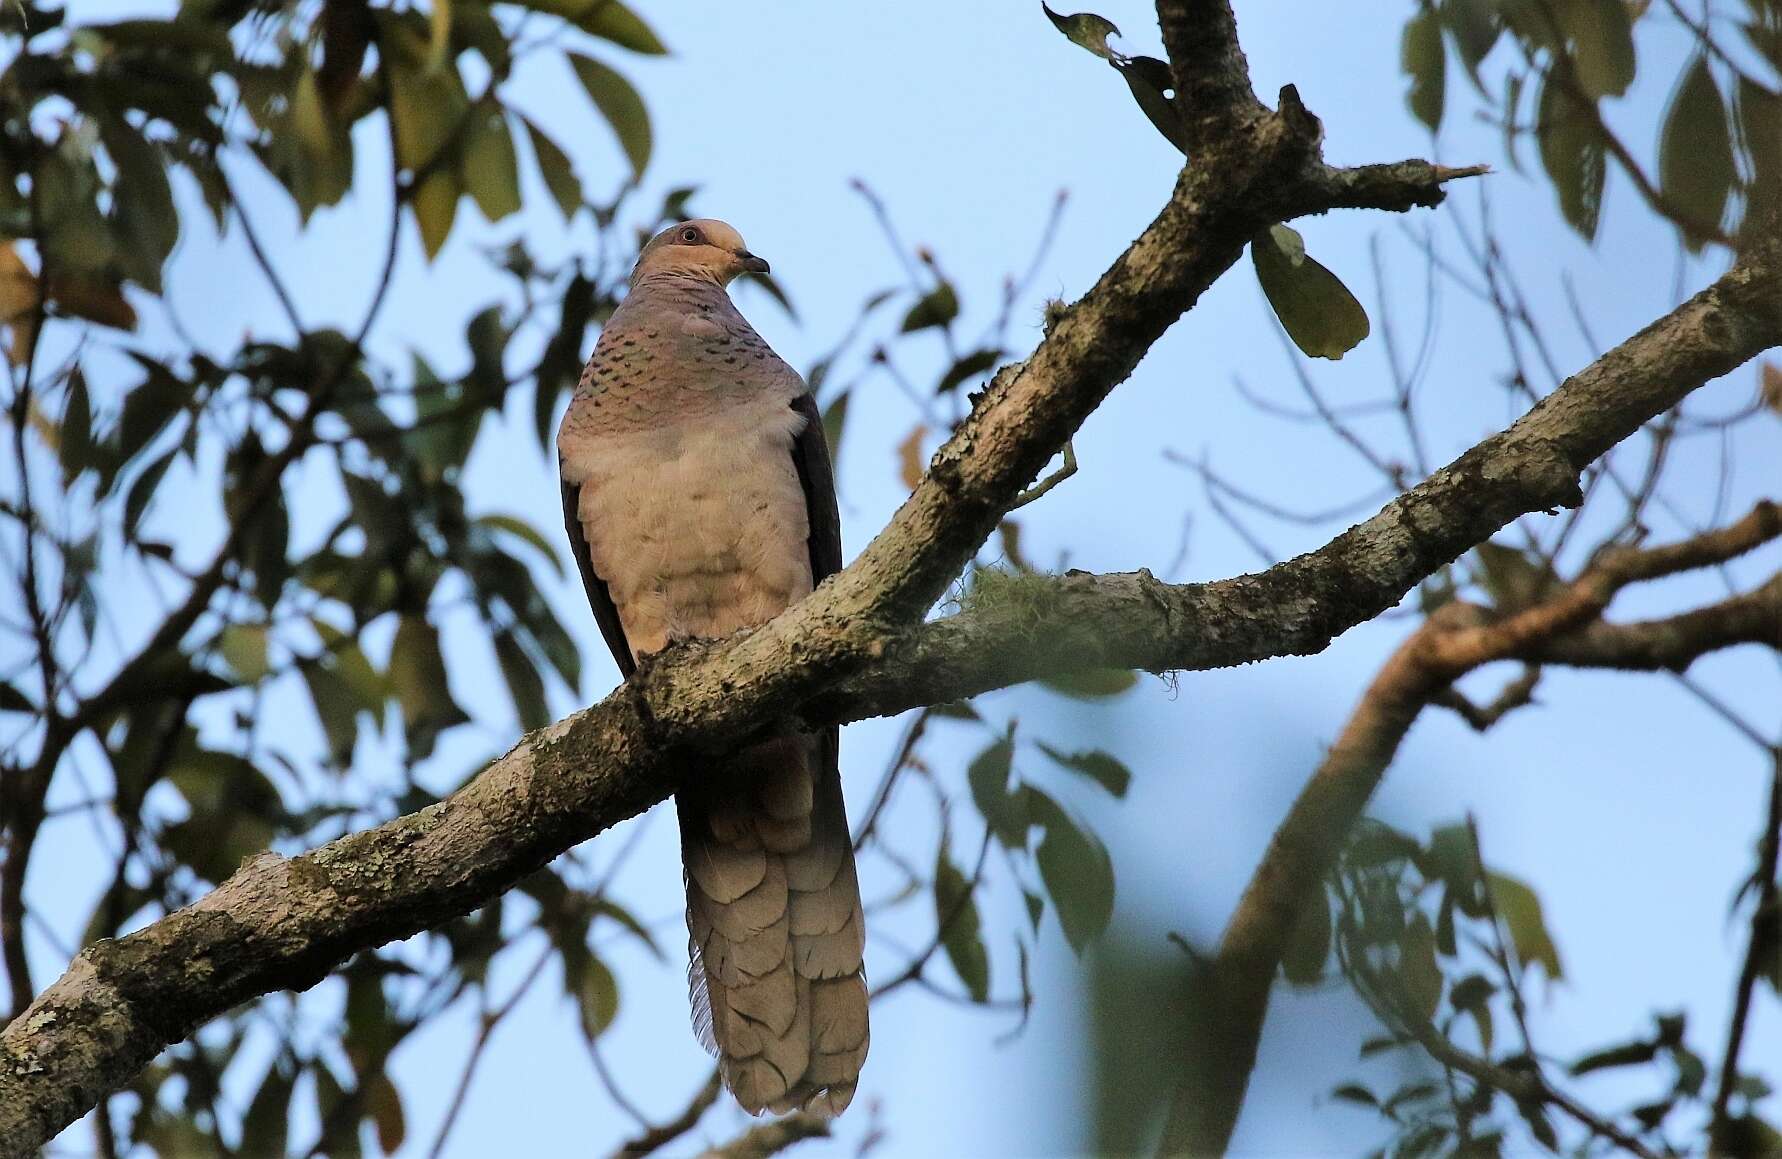 Image of Barred Cuckoo Dove